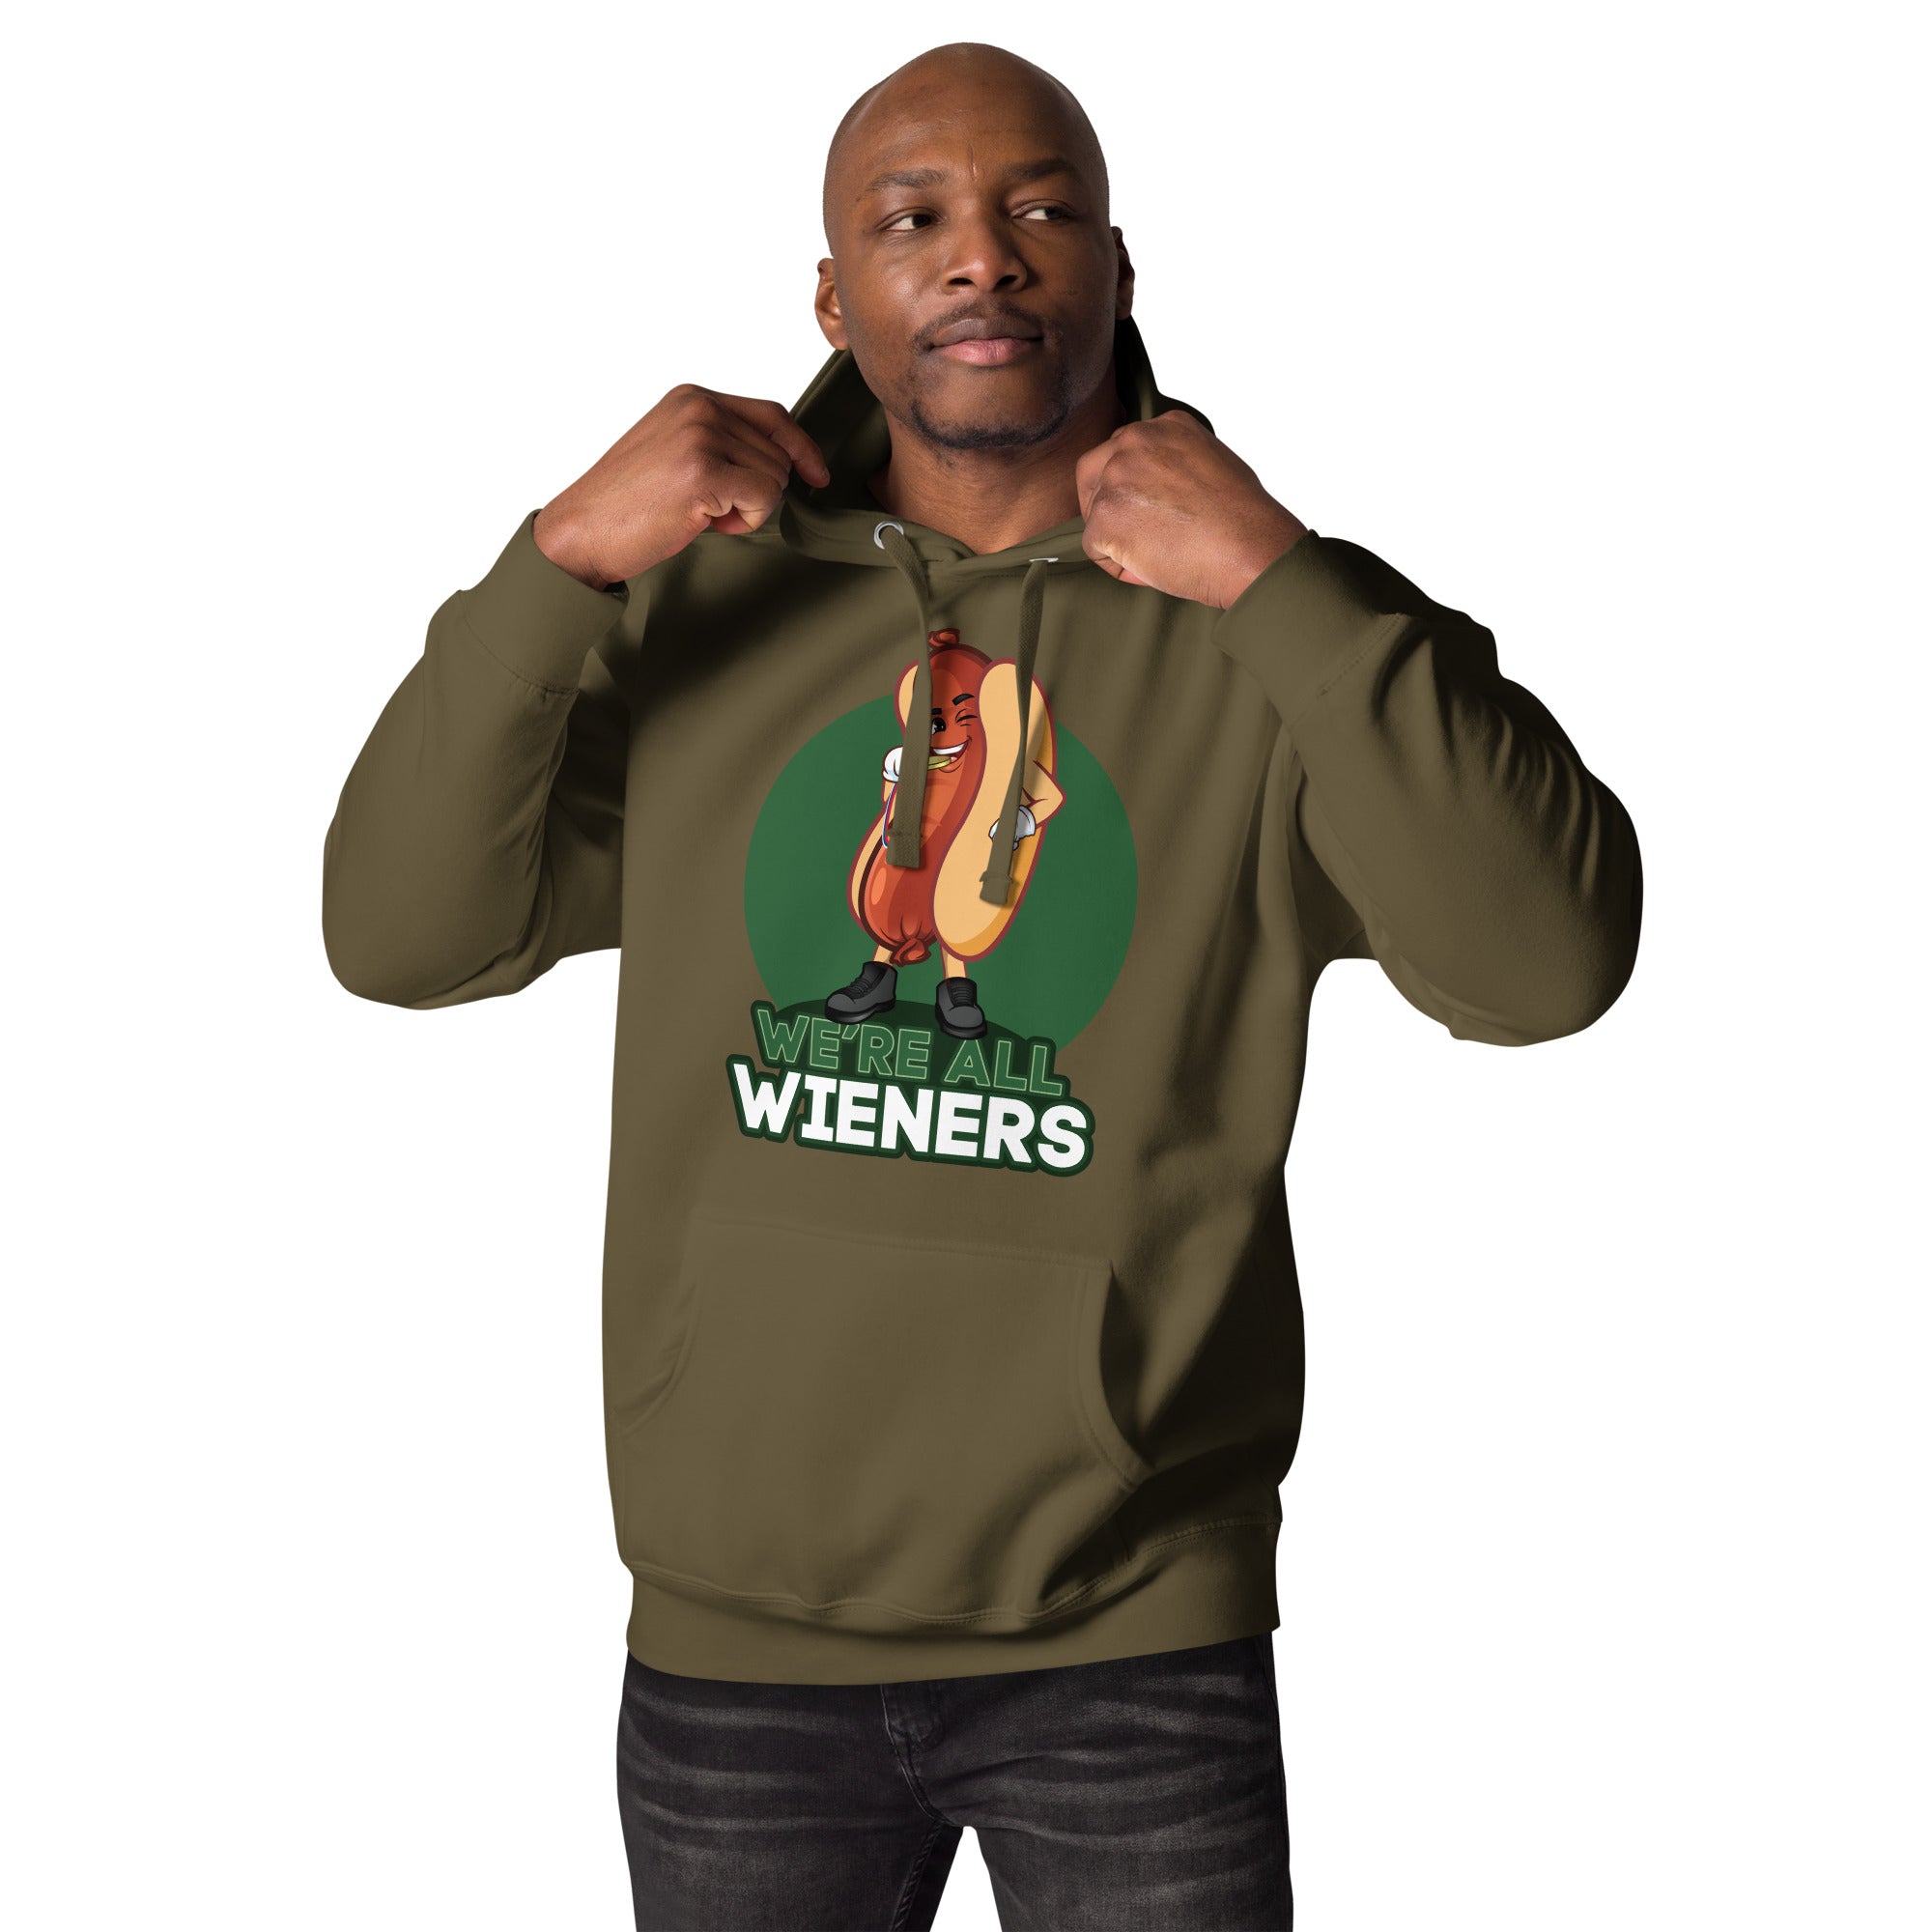 We're All Wieners Original Men's Heavy Hoodie - Green